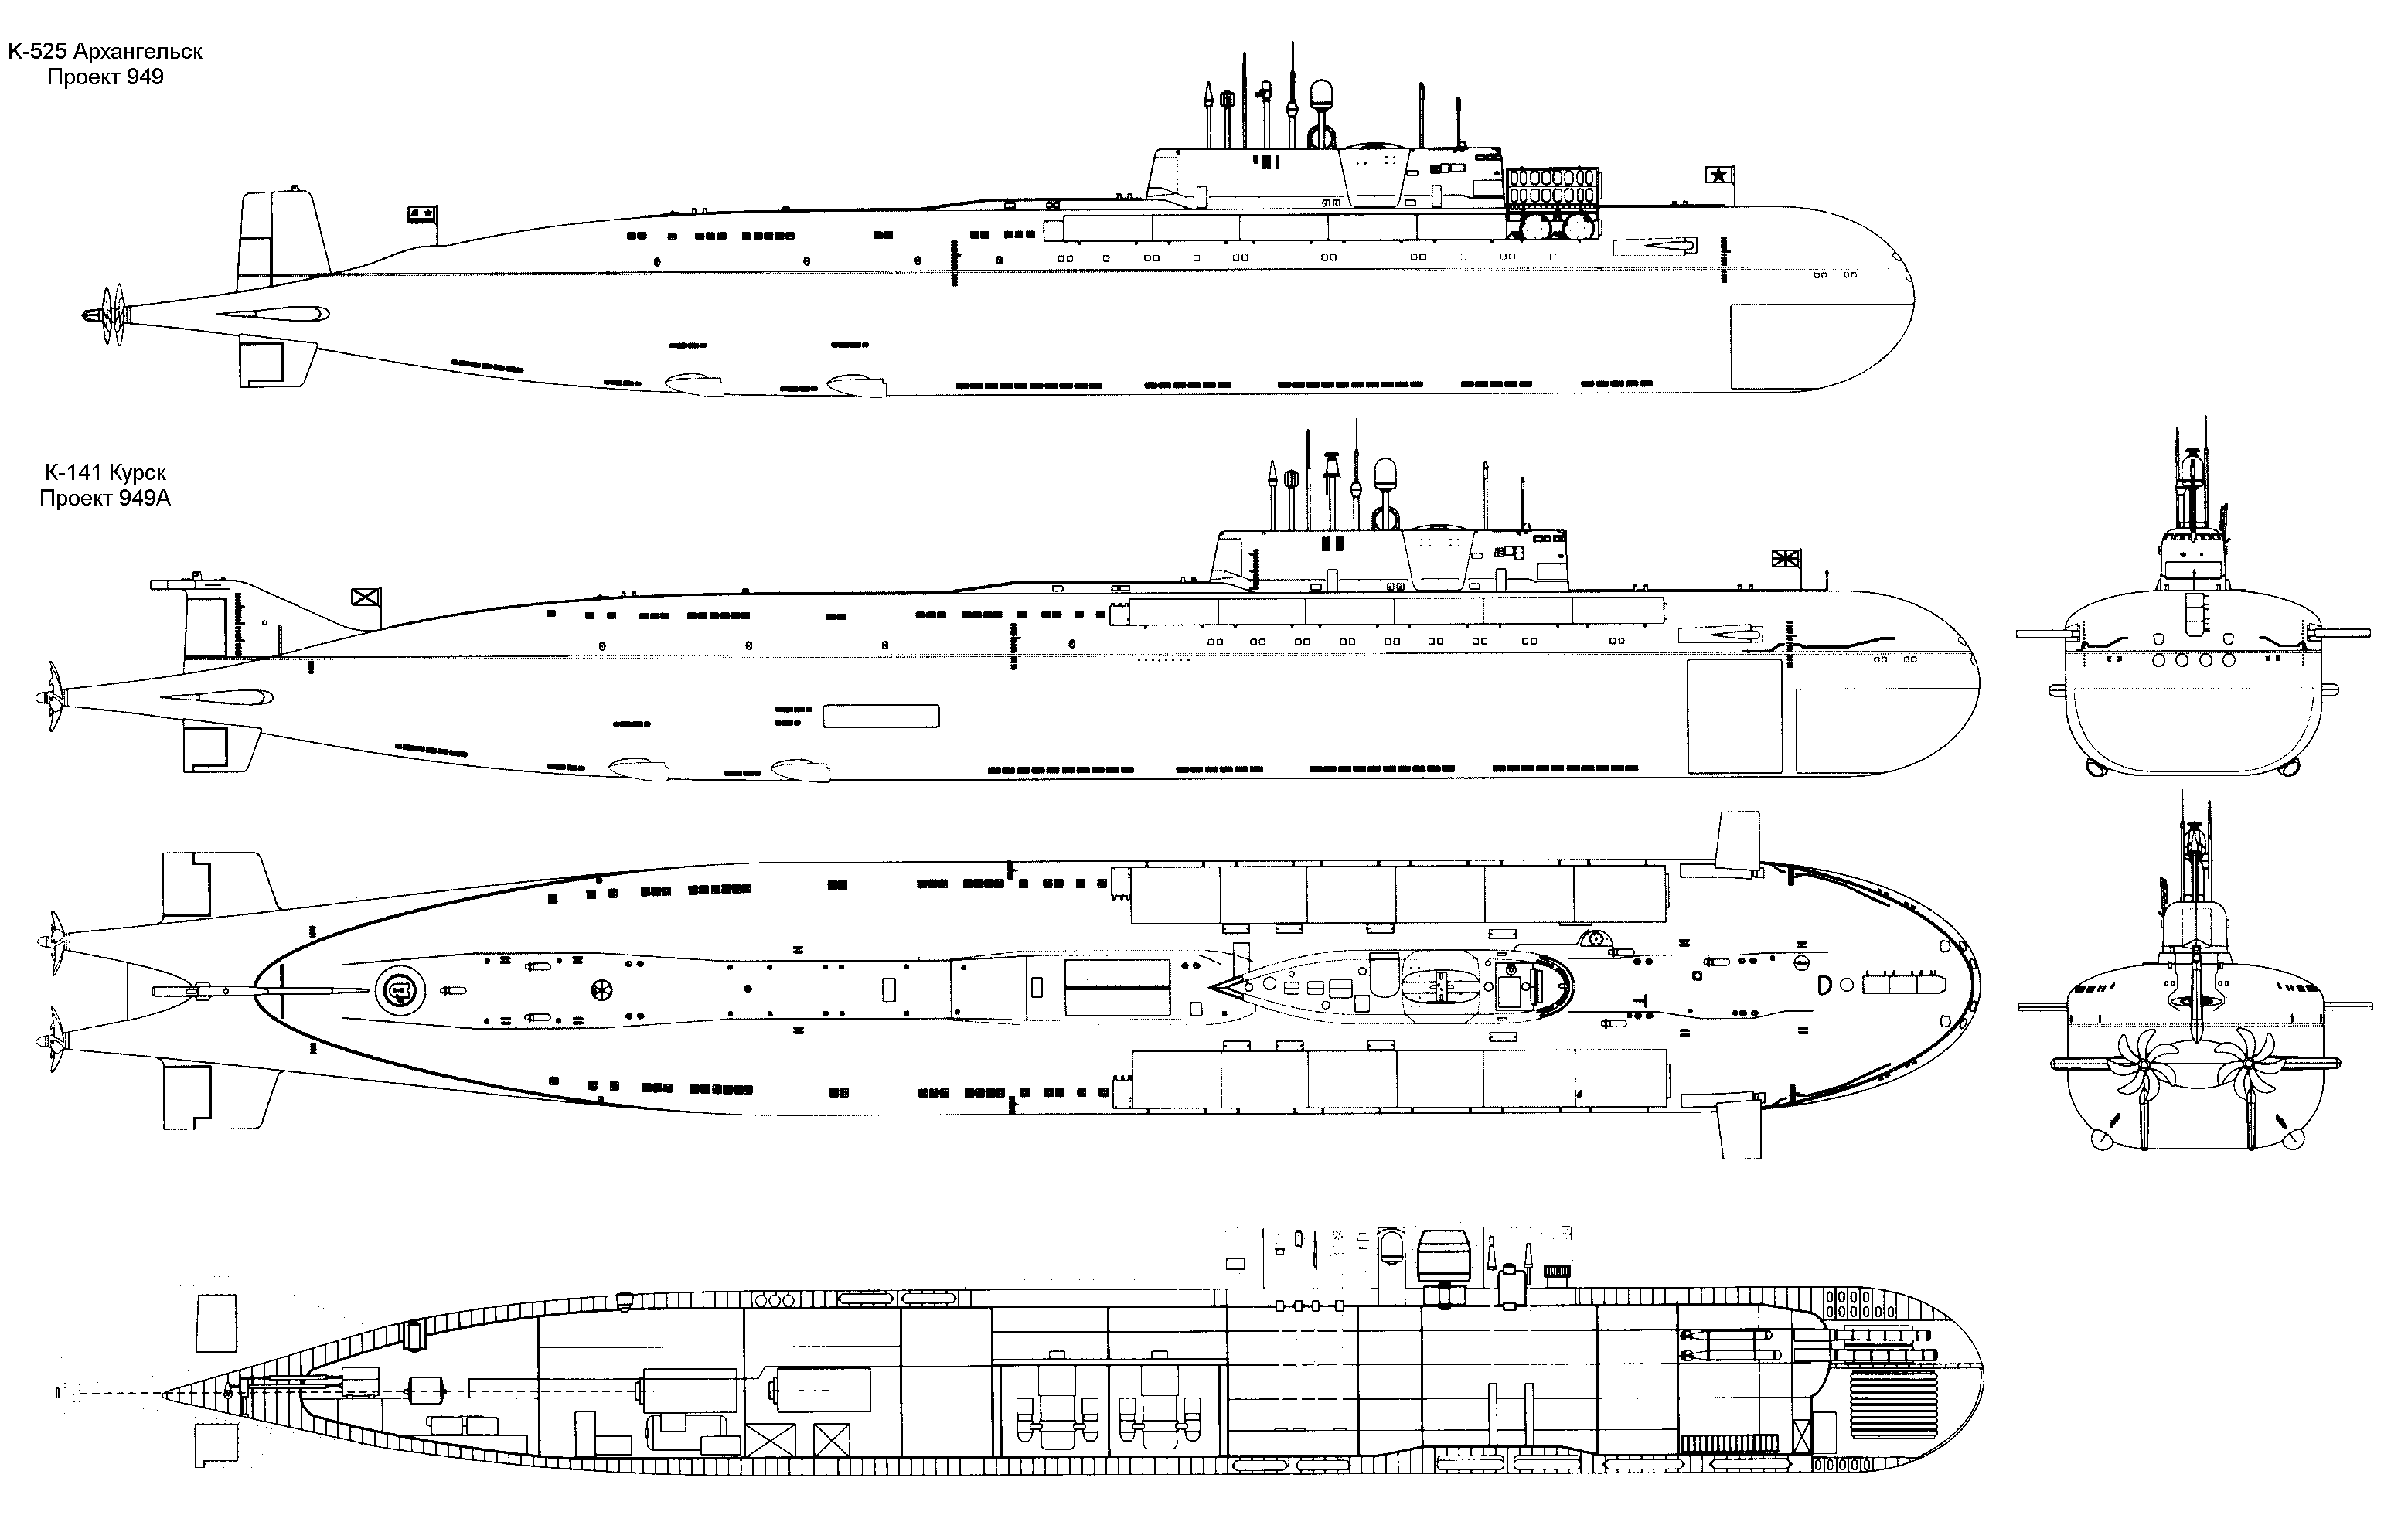 Arkhangelsk K-525 Russian submarine blueprint